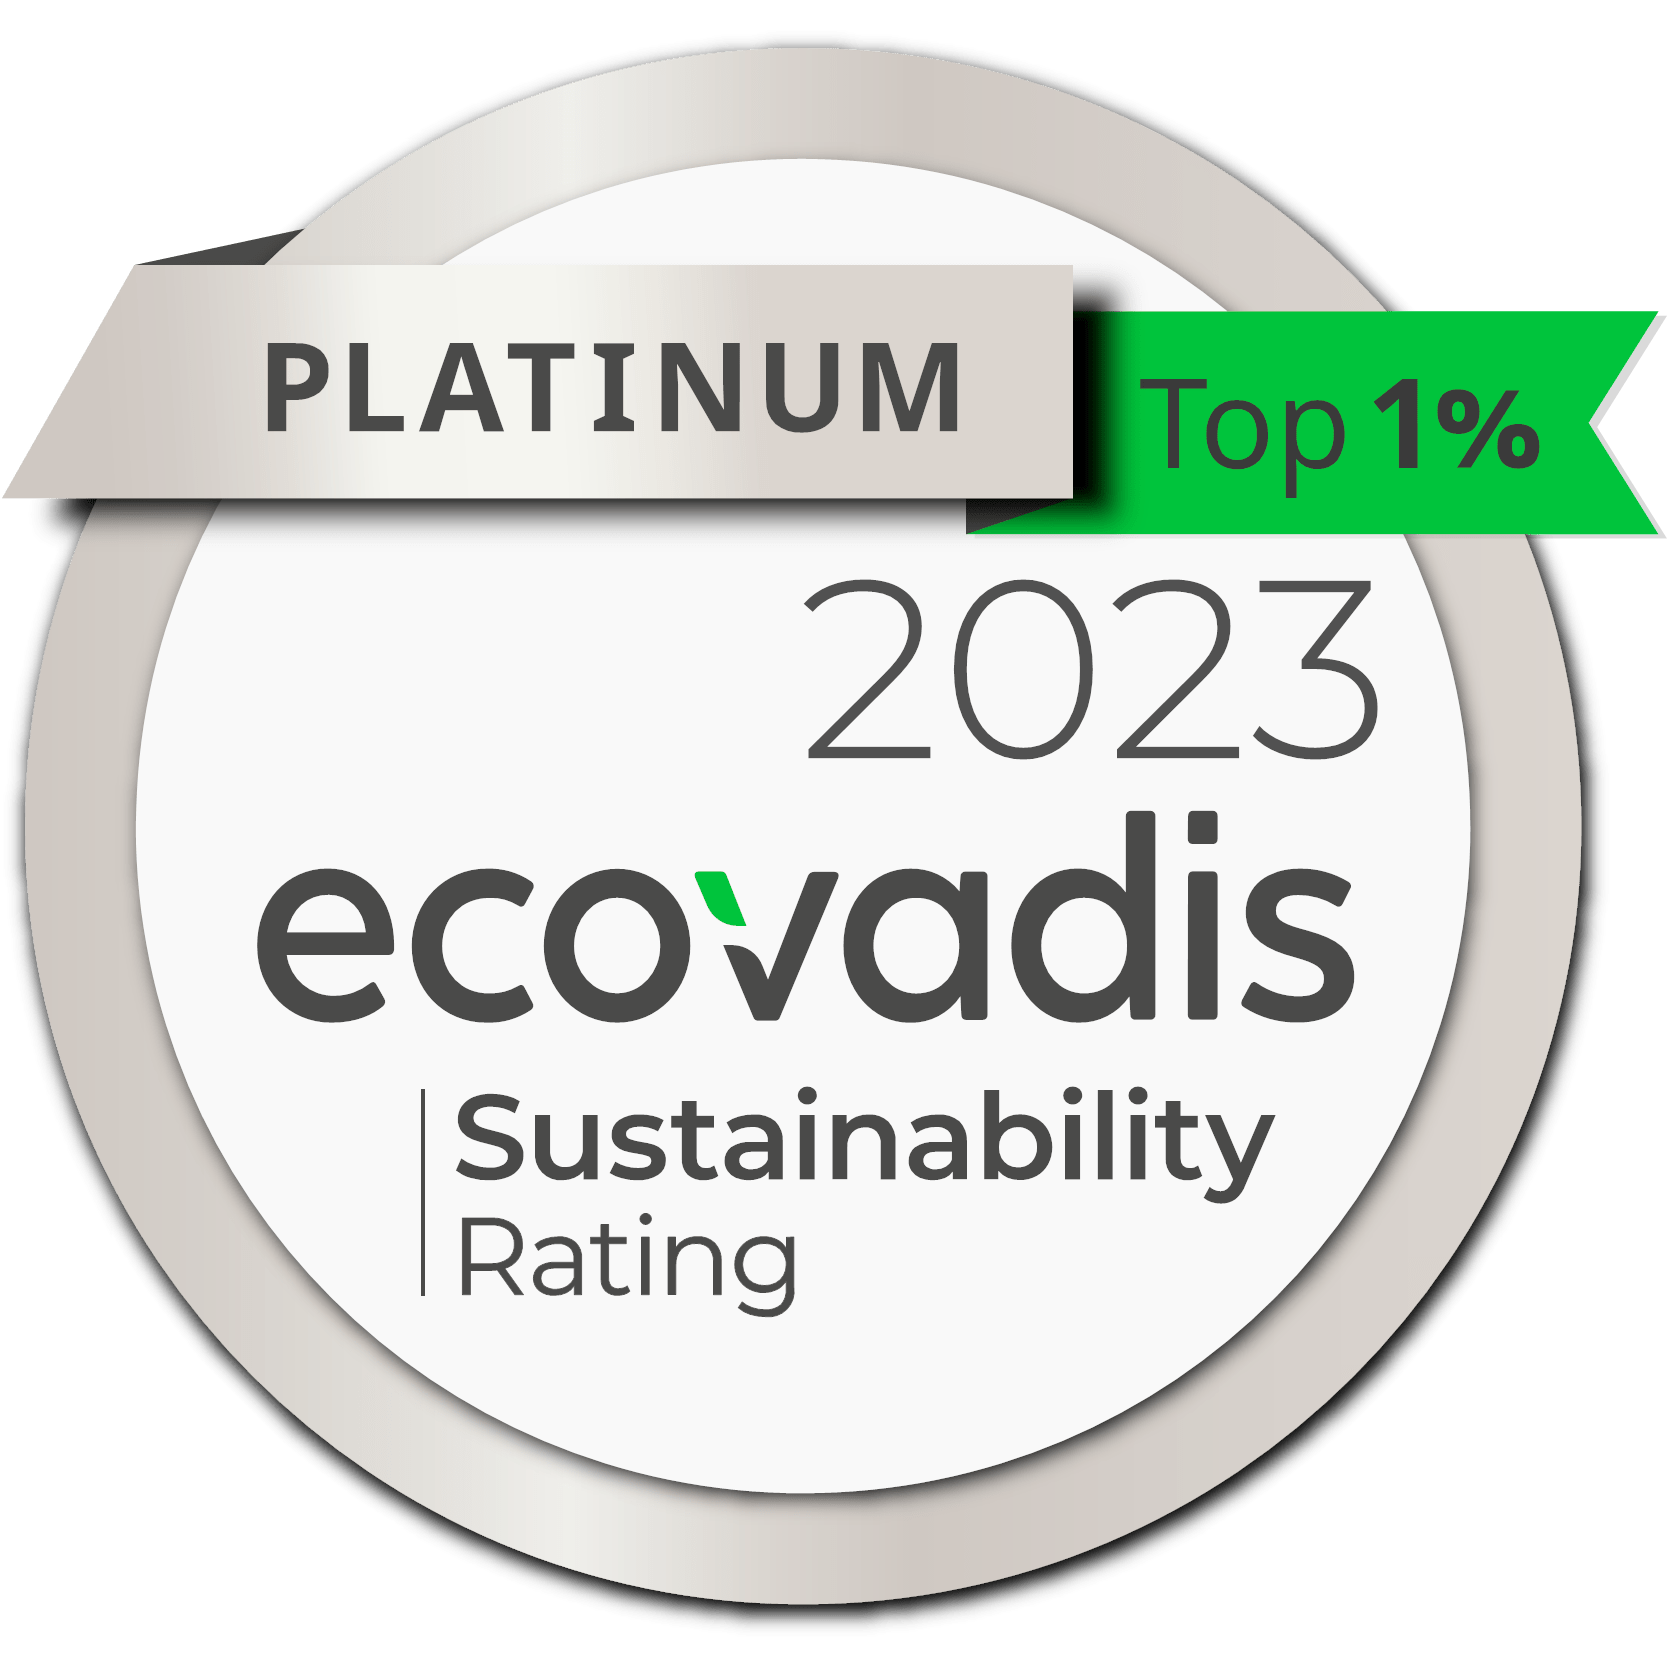 Platinum sustainability rating awarded in 2023